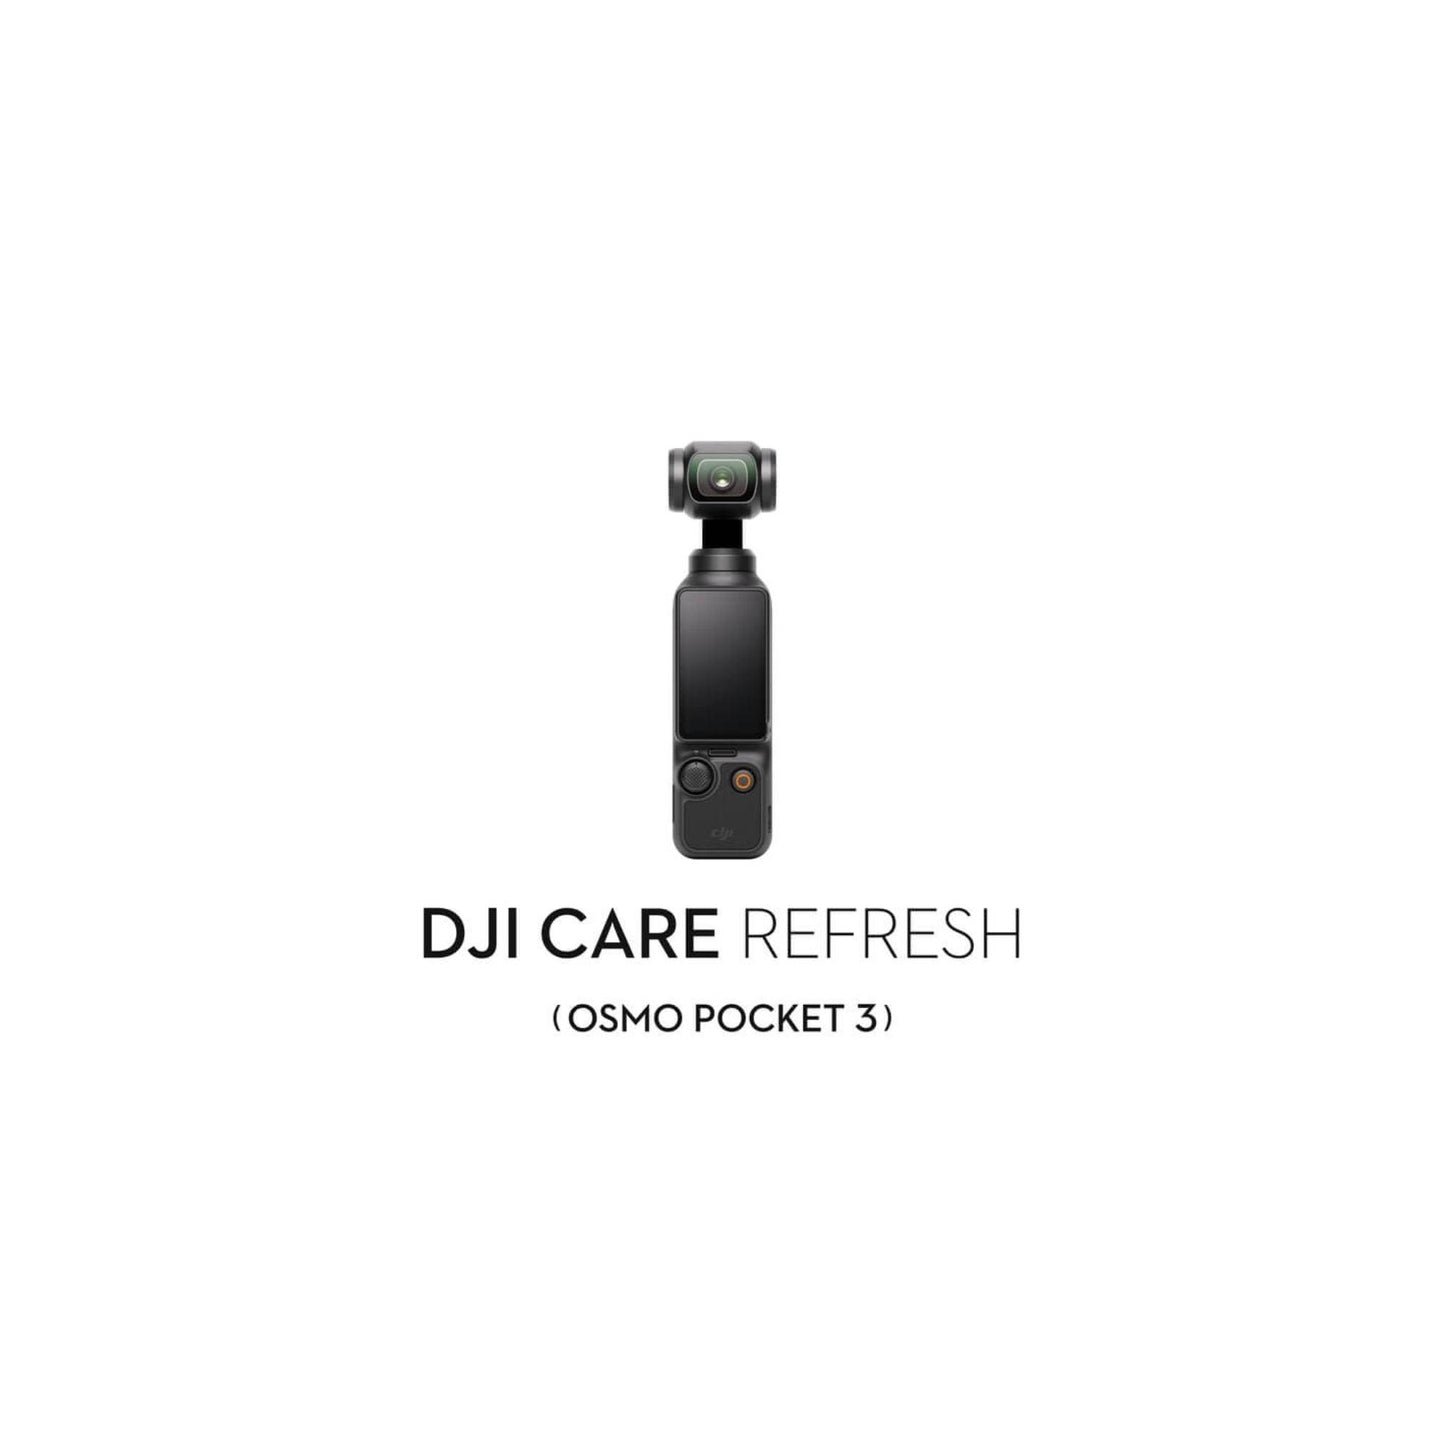 DJI Care Refresh 1-Year Plan (Osmo Pocket 3) - Silverlight Optics